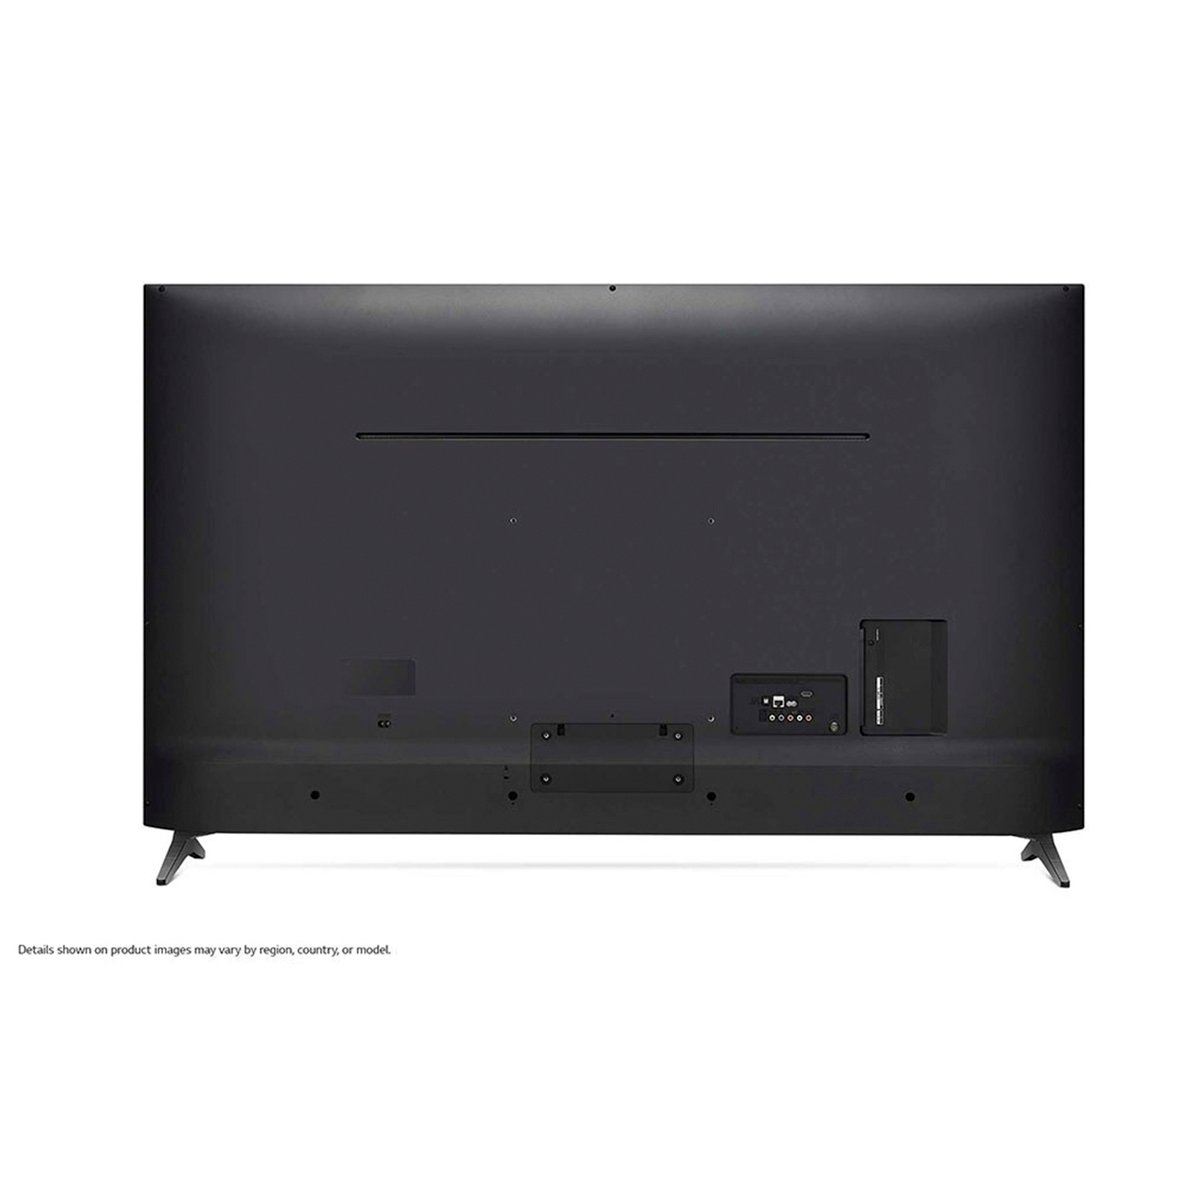 LG 4K Ultra HD Smart LED TV65UN7100PVA 65"